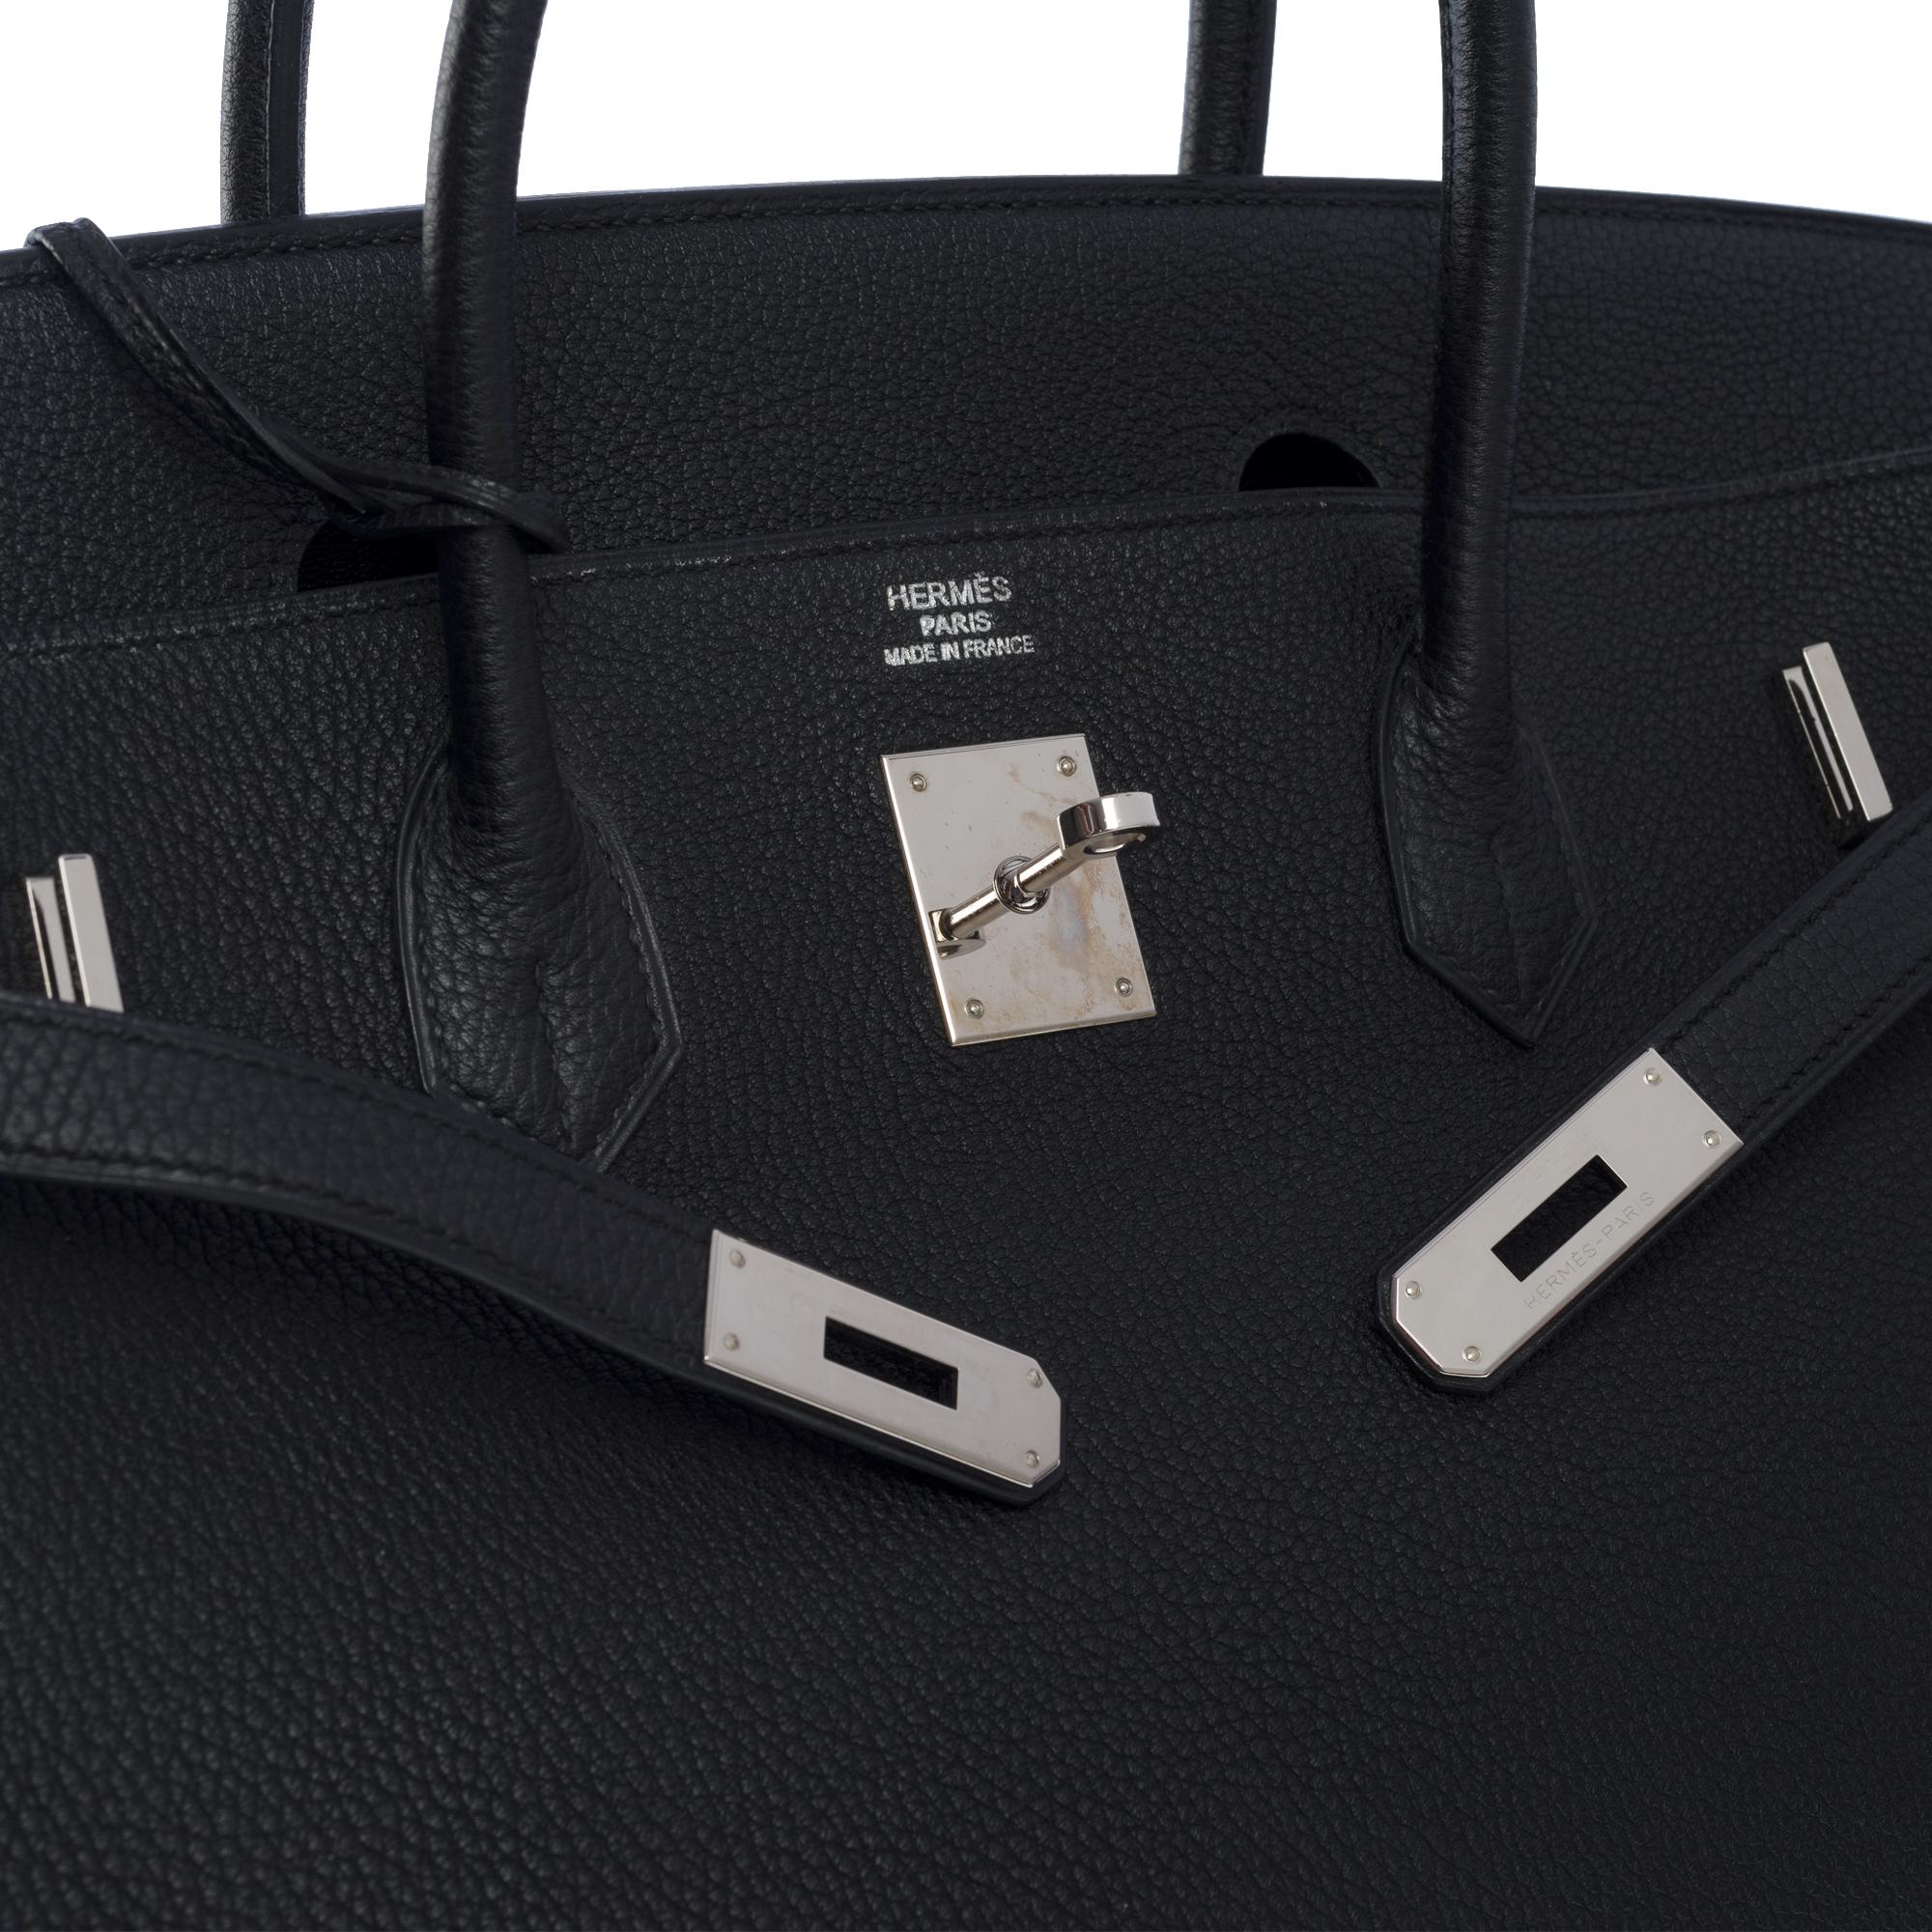 Stunning Hermes Birkin 40cm handbag in Black Togo leather, SHW 1